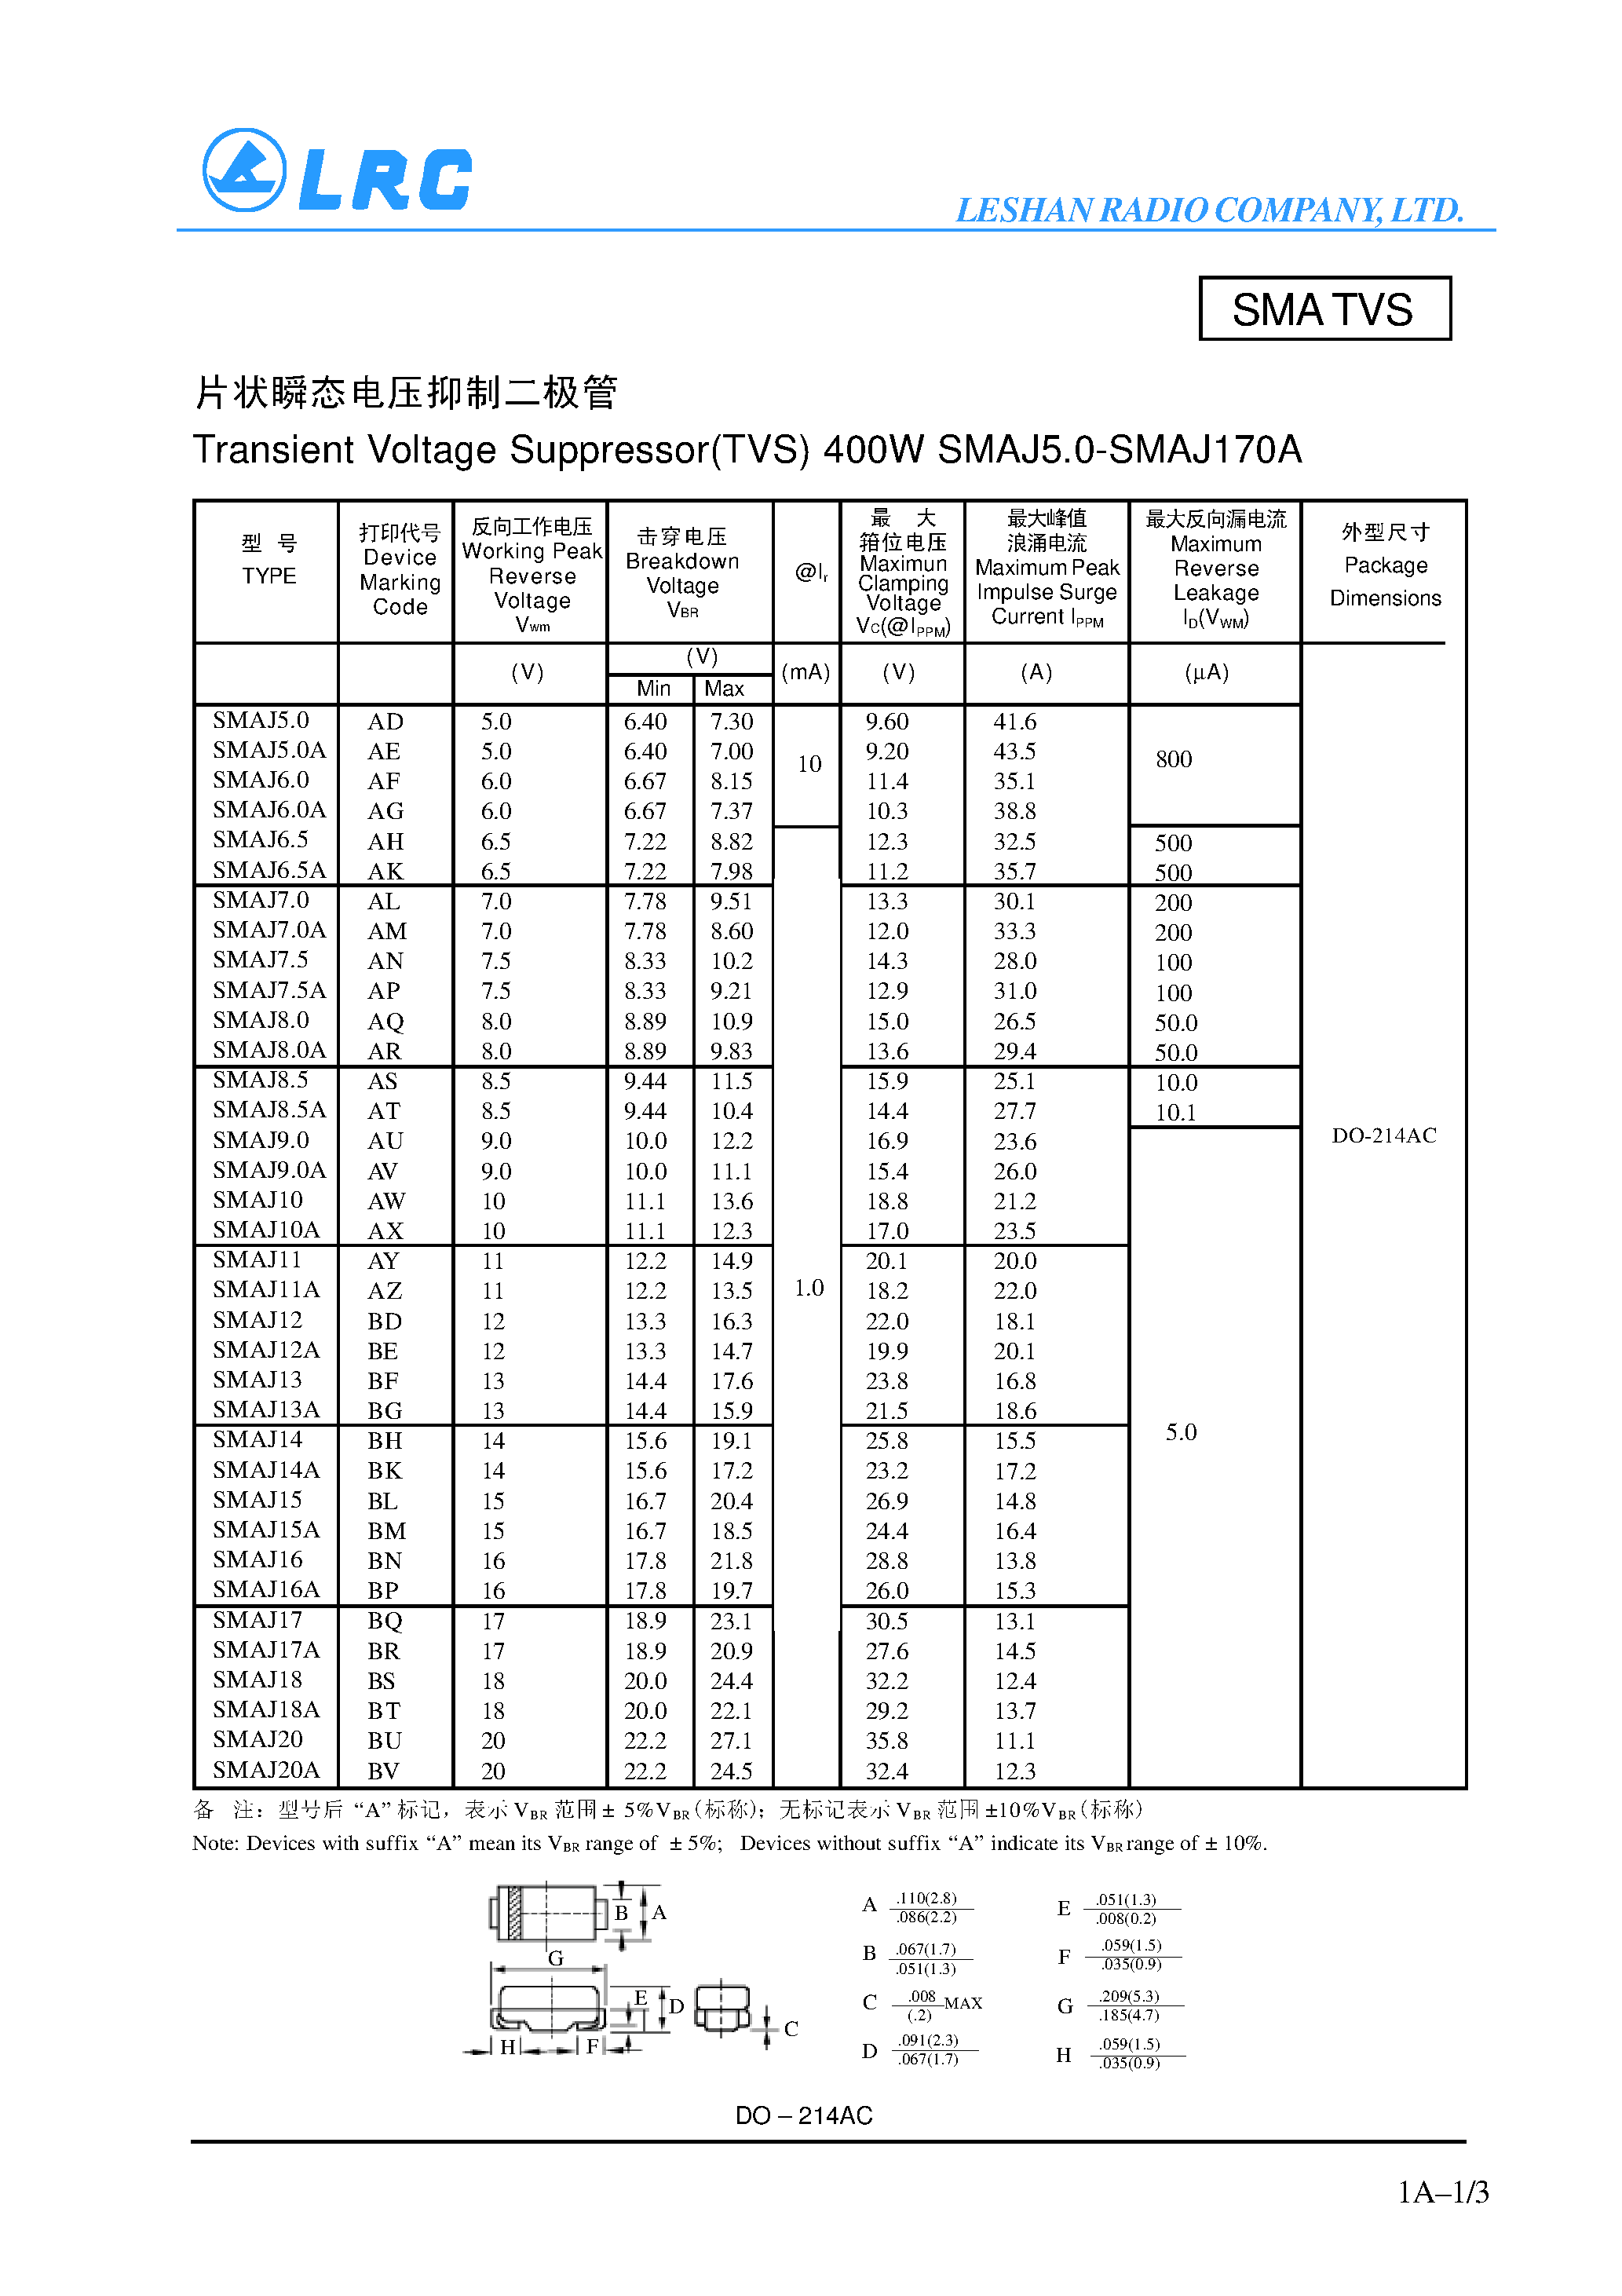 Даташит 400WSMAJ5.0 - Transient Voltage Suppressor(TVS)400W SMAJ5.0-SMAJ170A страница 1